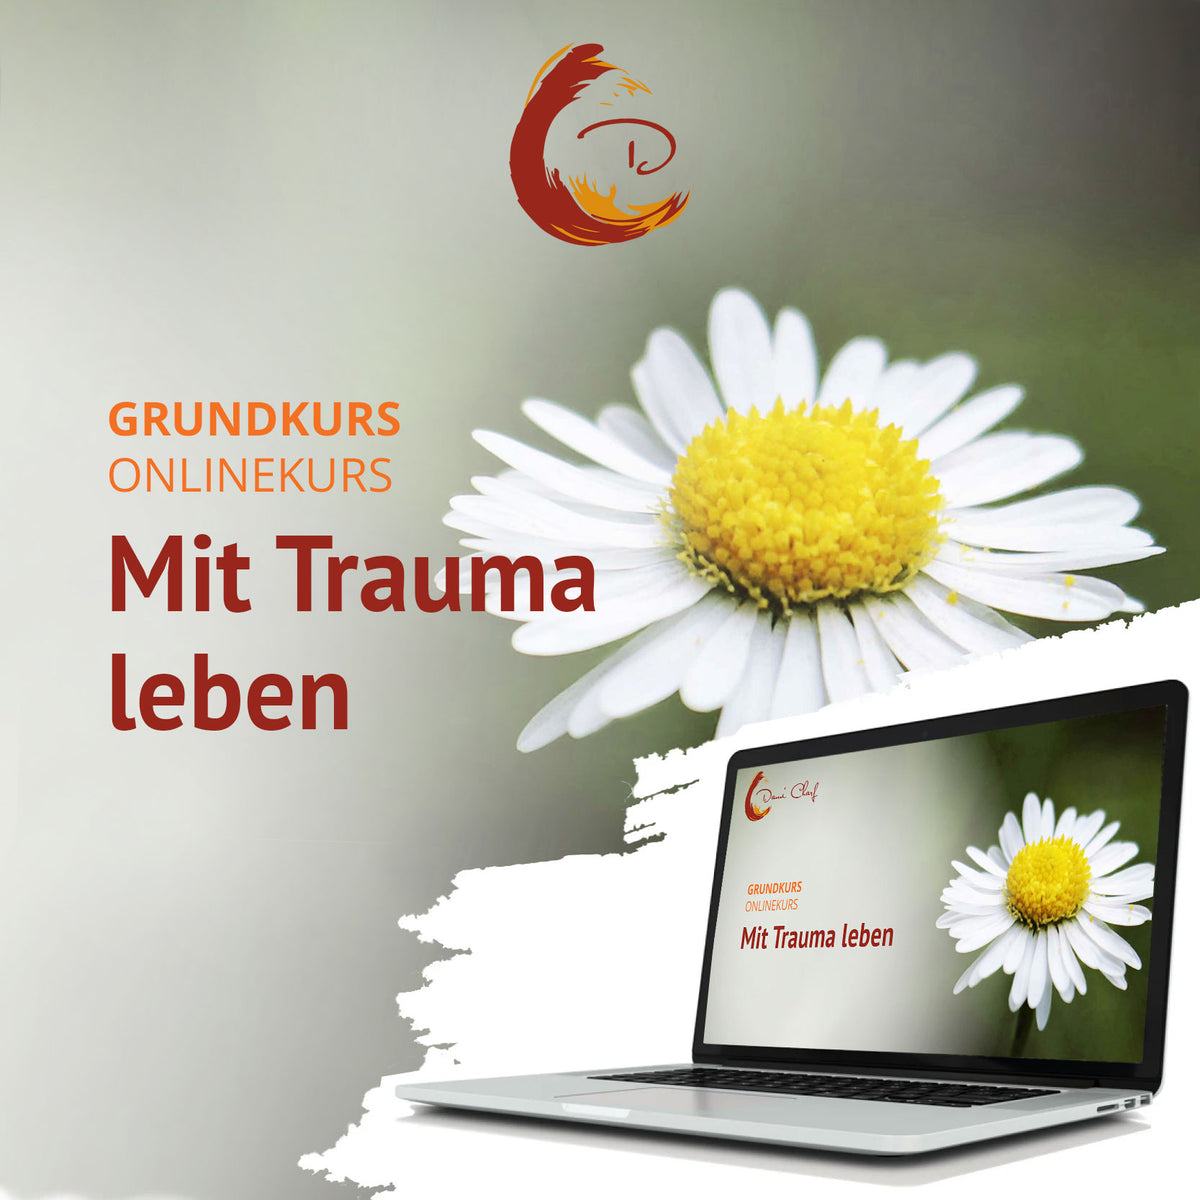 Mit Trauma leben - Onlinekurs (Shop Dami Charf)